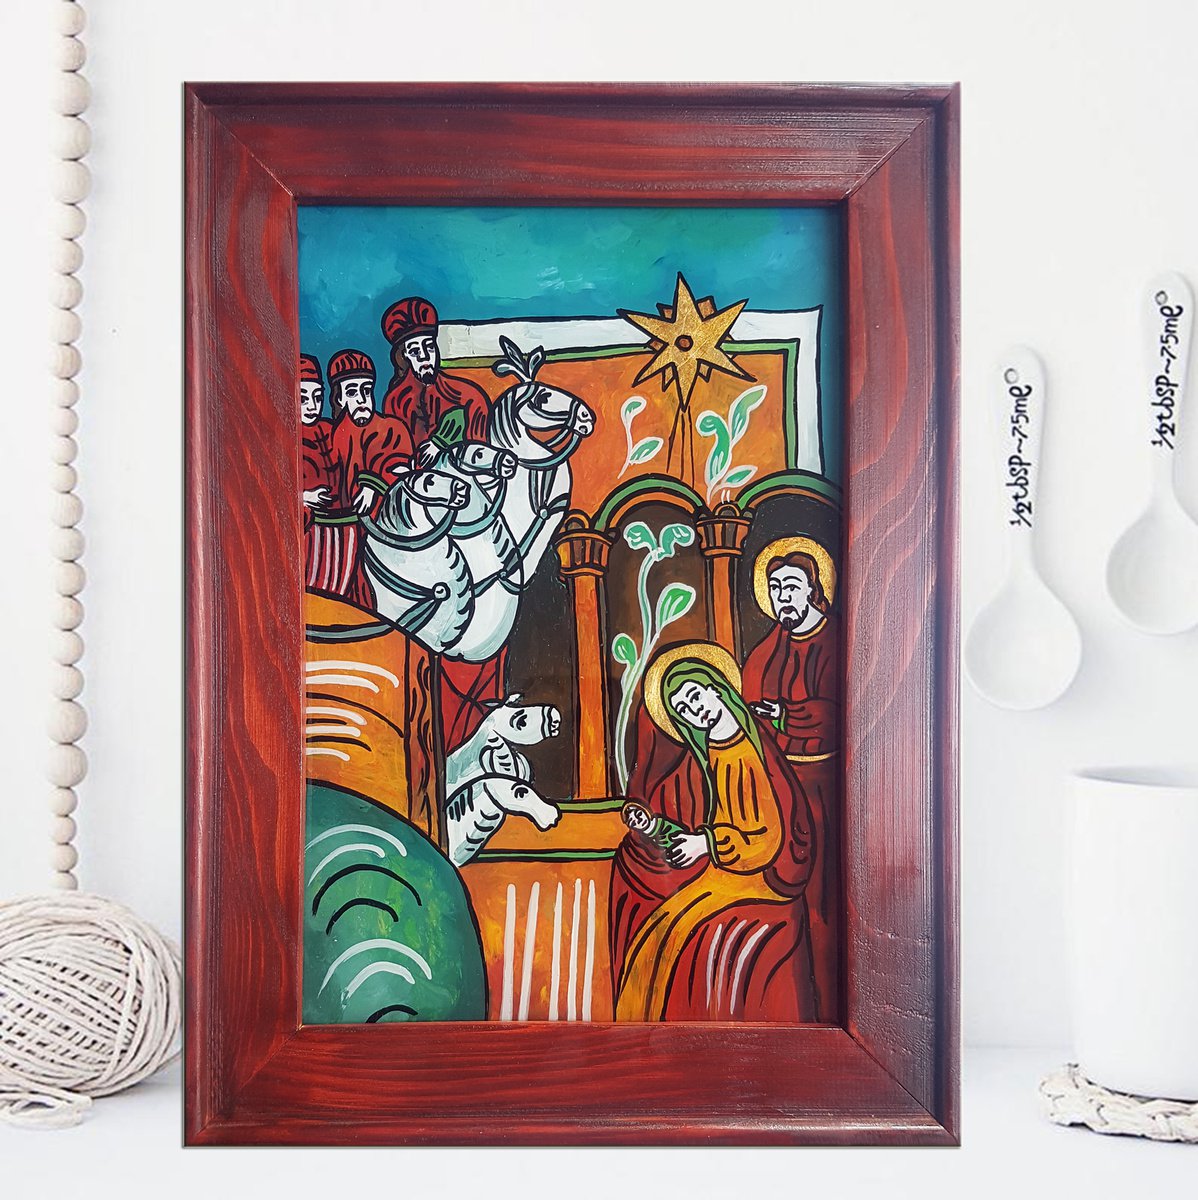 The Nativity, The birth of Jesus Christ by Adriana Vasile